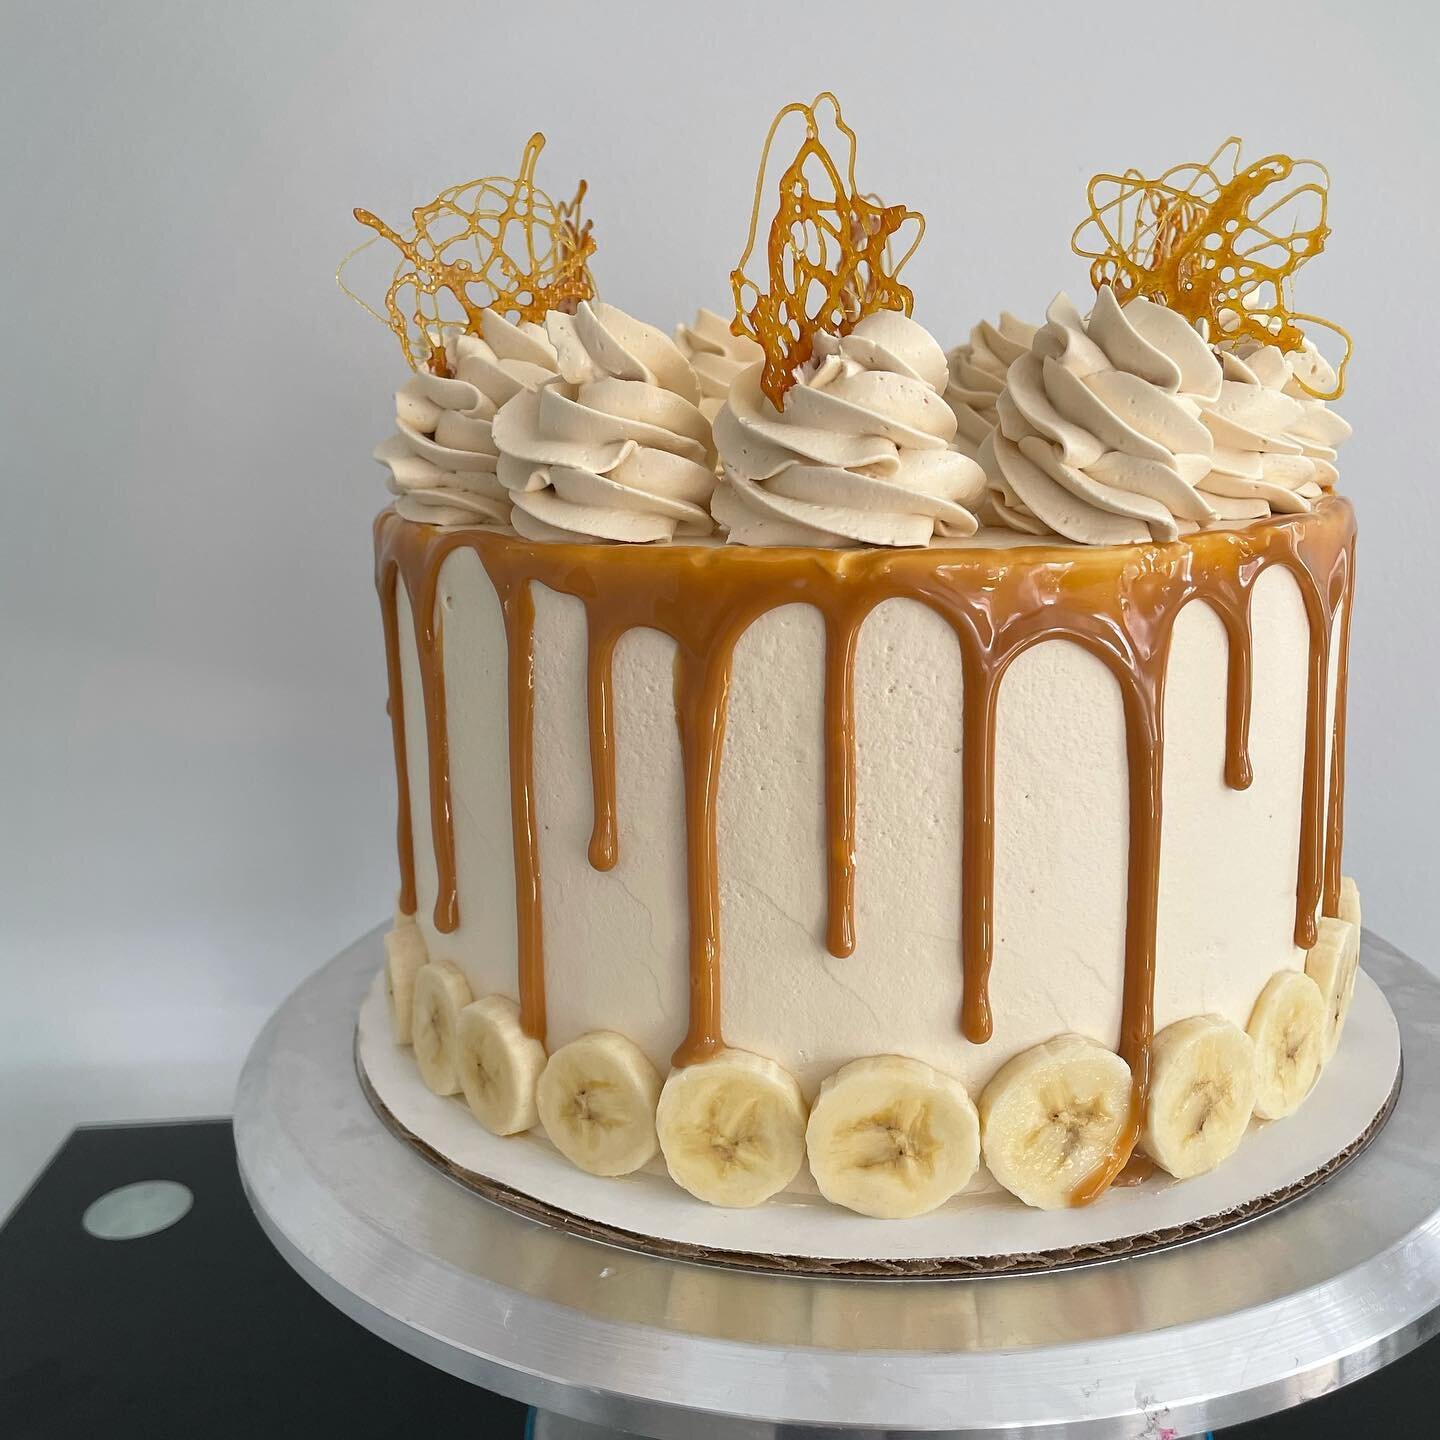 Hey sweet tooth&rsquo;s! 👋 it&rsquo;s Banoffee time.
Banana 🍌 cake, dulce de leche, banana custard, dulce de leche buttercream. #YUM

#nomnomnom #yummy #dulcedeleche #caramel #banana #banoffee #sweet #sweets #sweetsofig #sweetsofinstagram #cake #ca